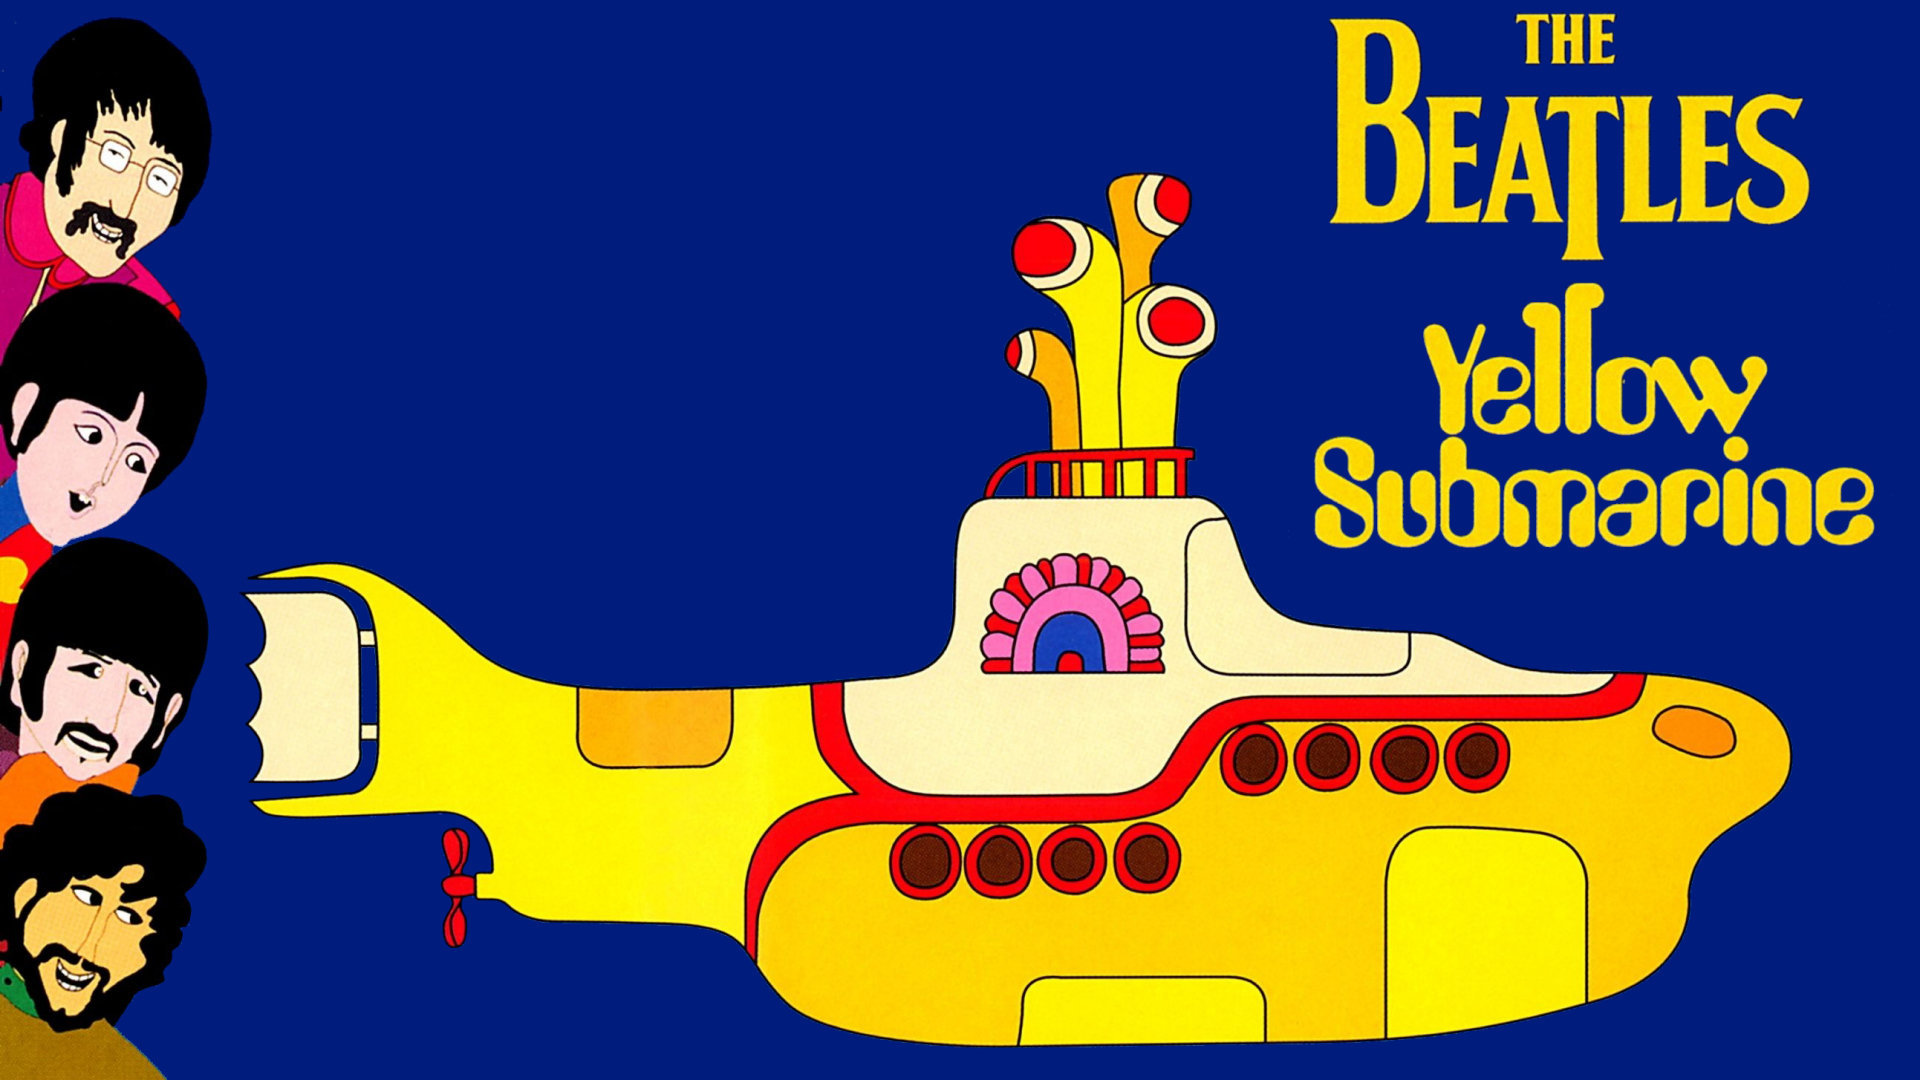 The Beatles In Yellow Submarine